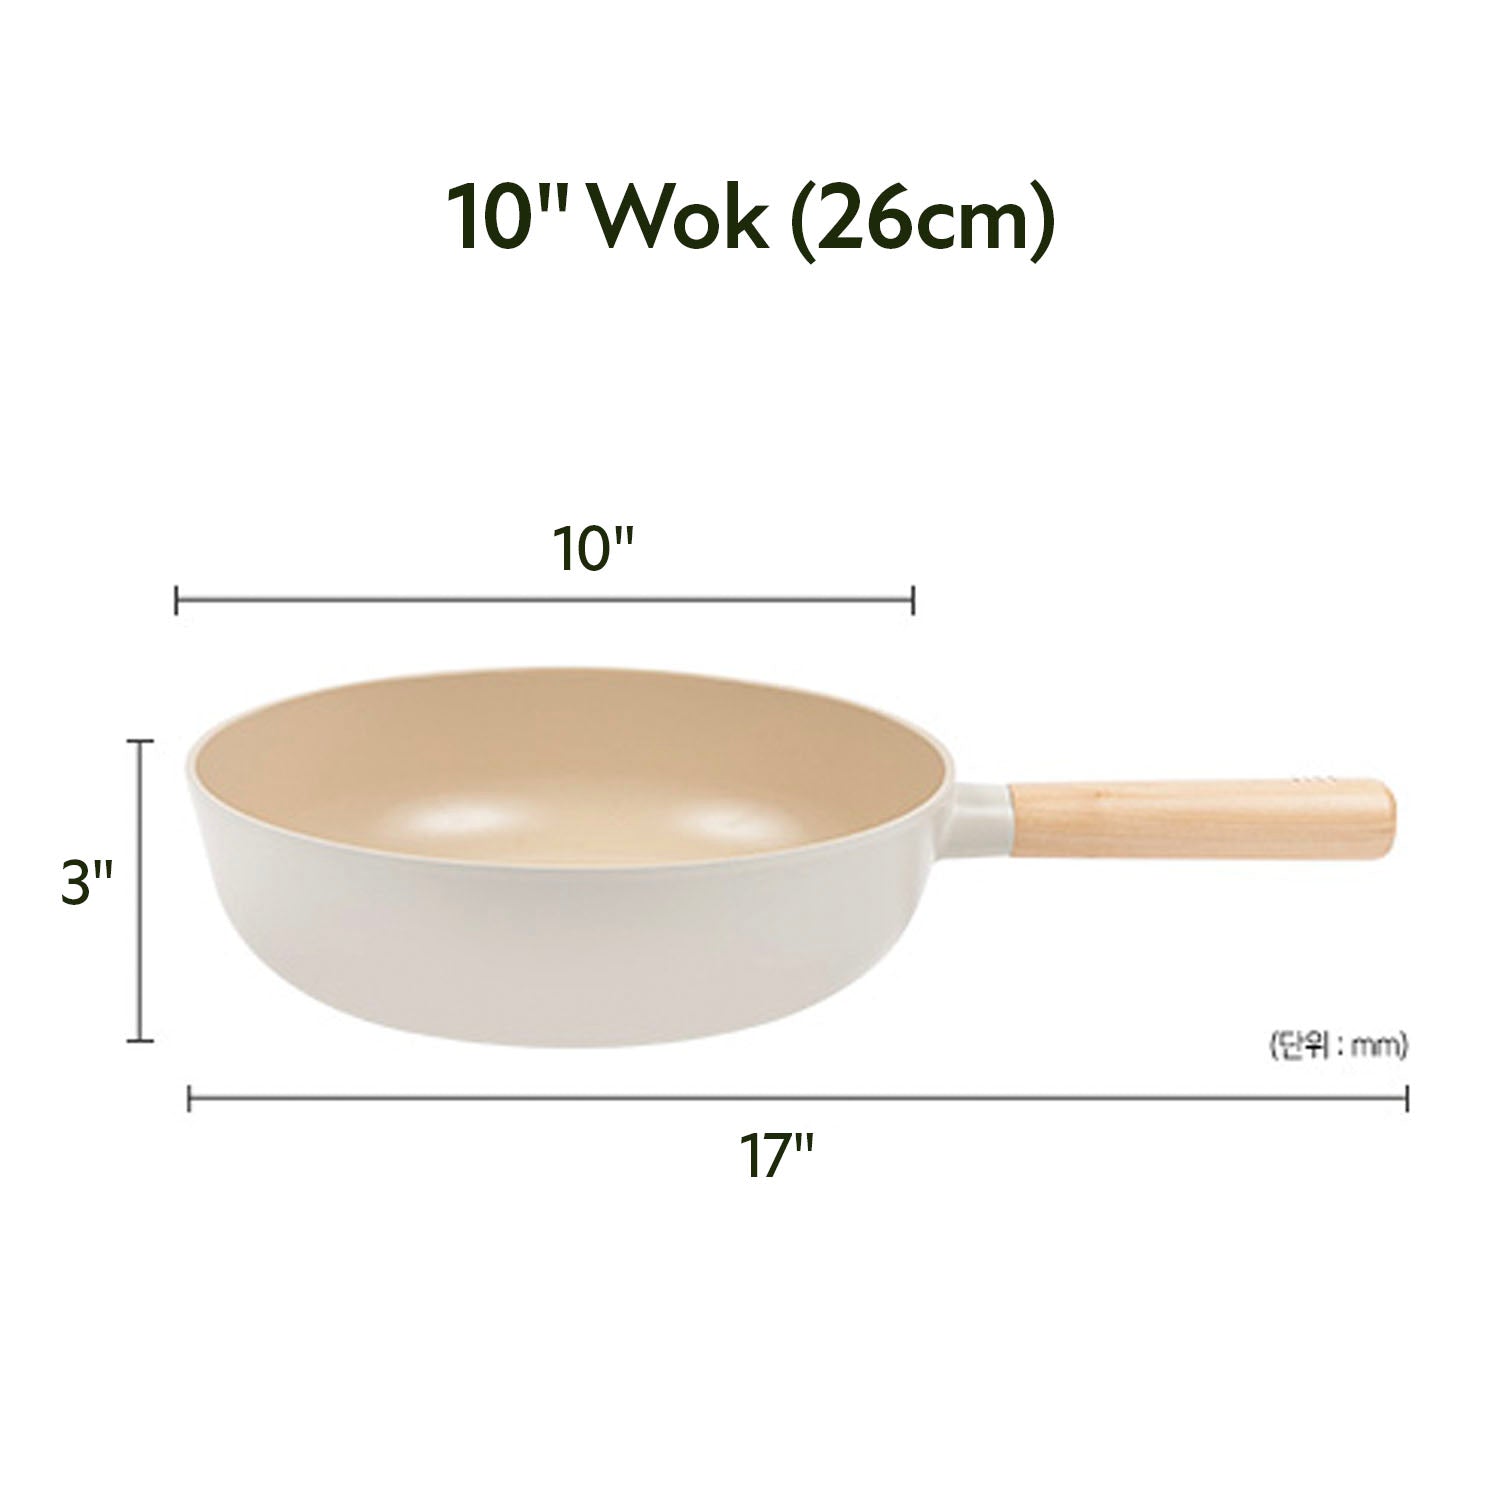 FIKA 10 Wok (26cm) – Neoflam